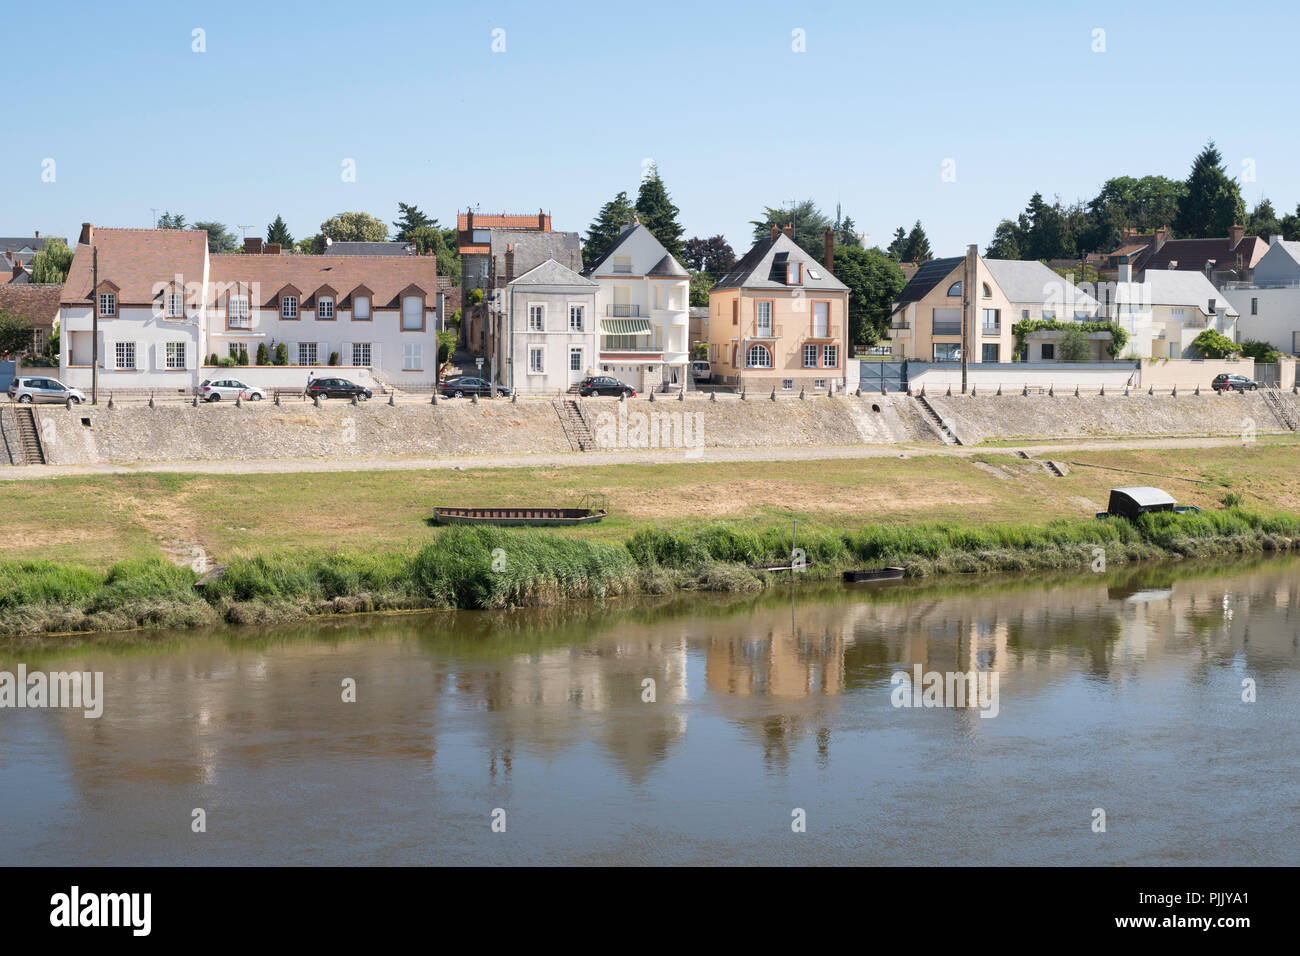 Row of riverside houses, Châteauneuf-sur-Loire,  Loiret department, France, Europe Stock Photo